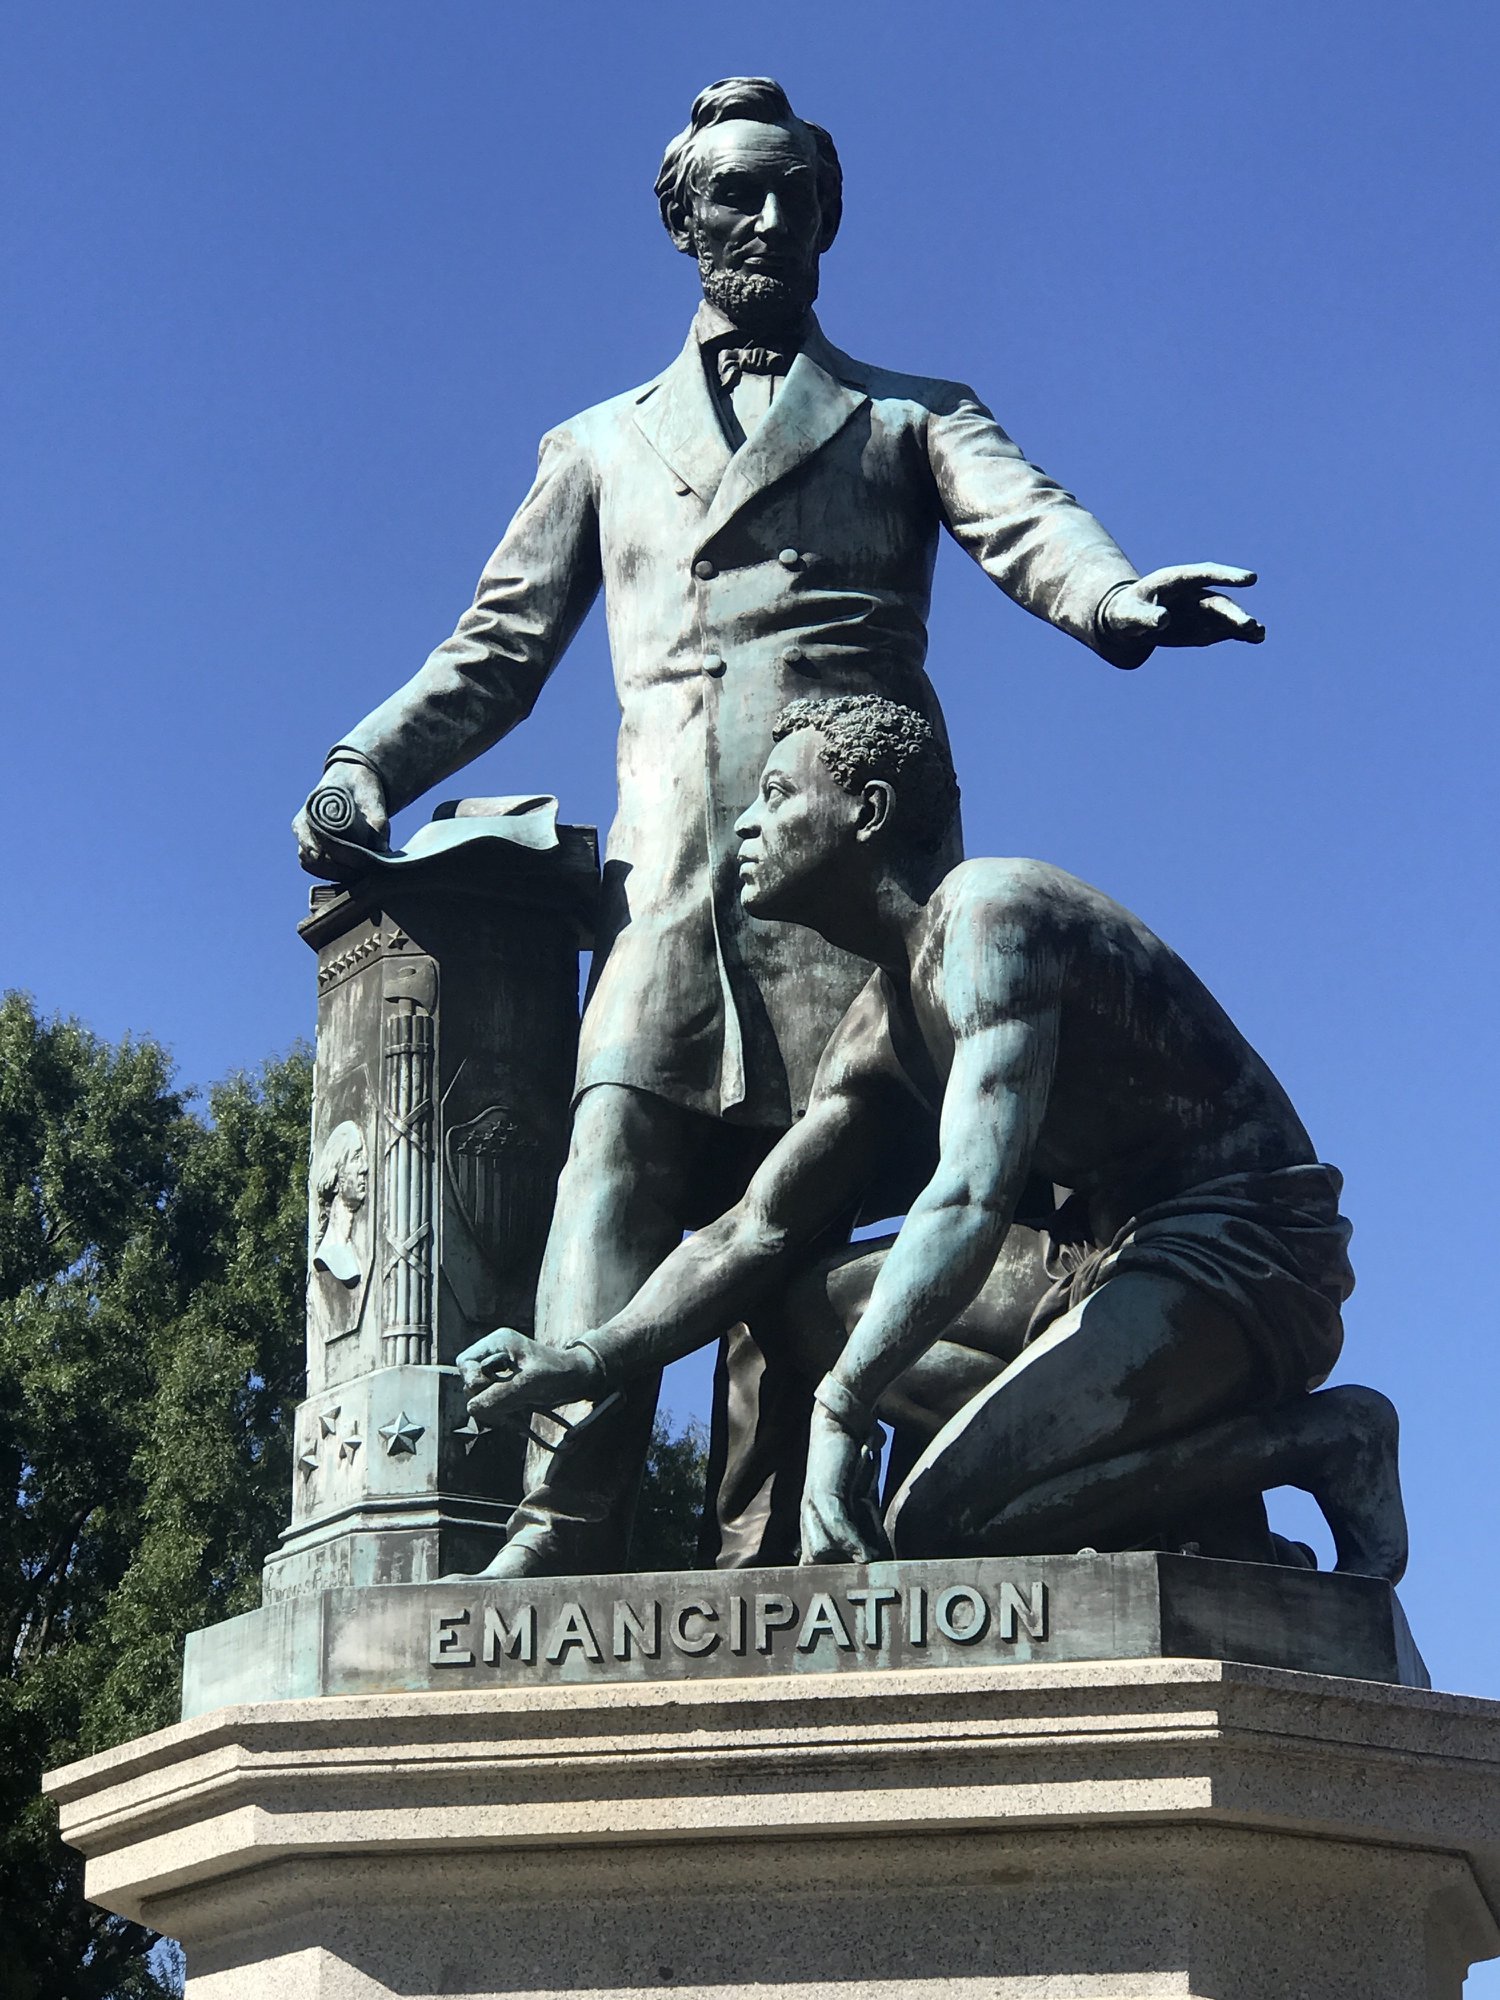 Photo of original Emancipation Group sculpture in Washington, D.C.